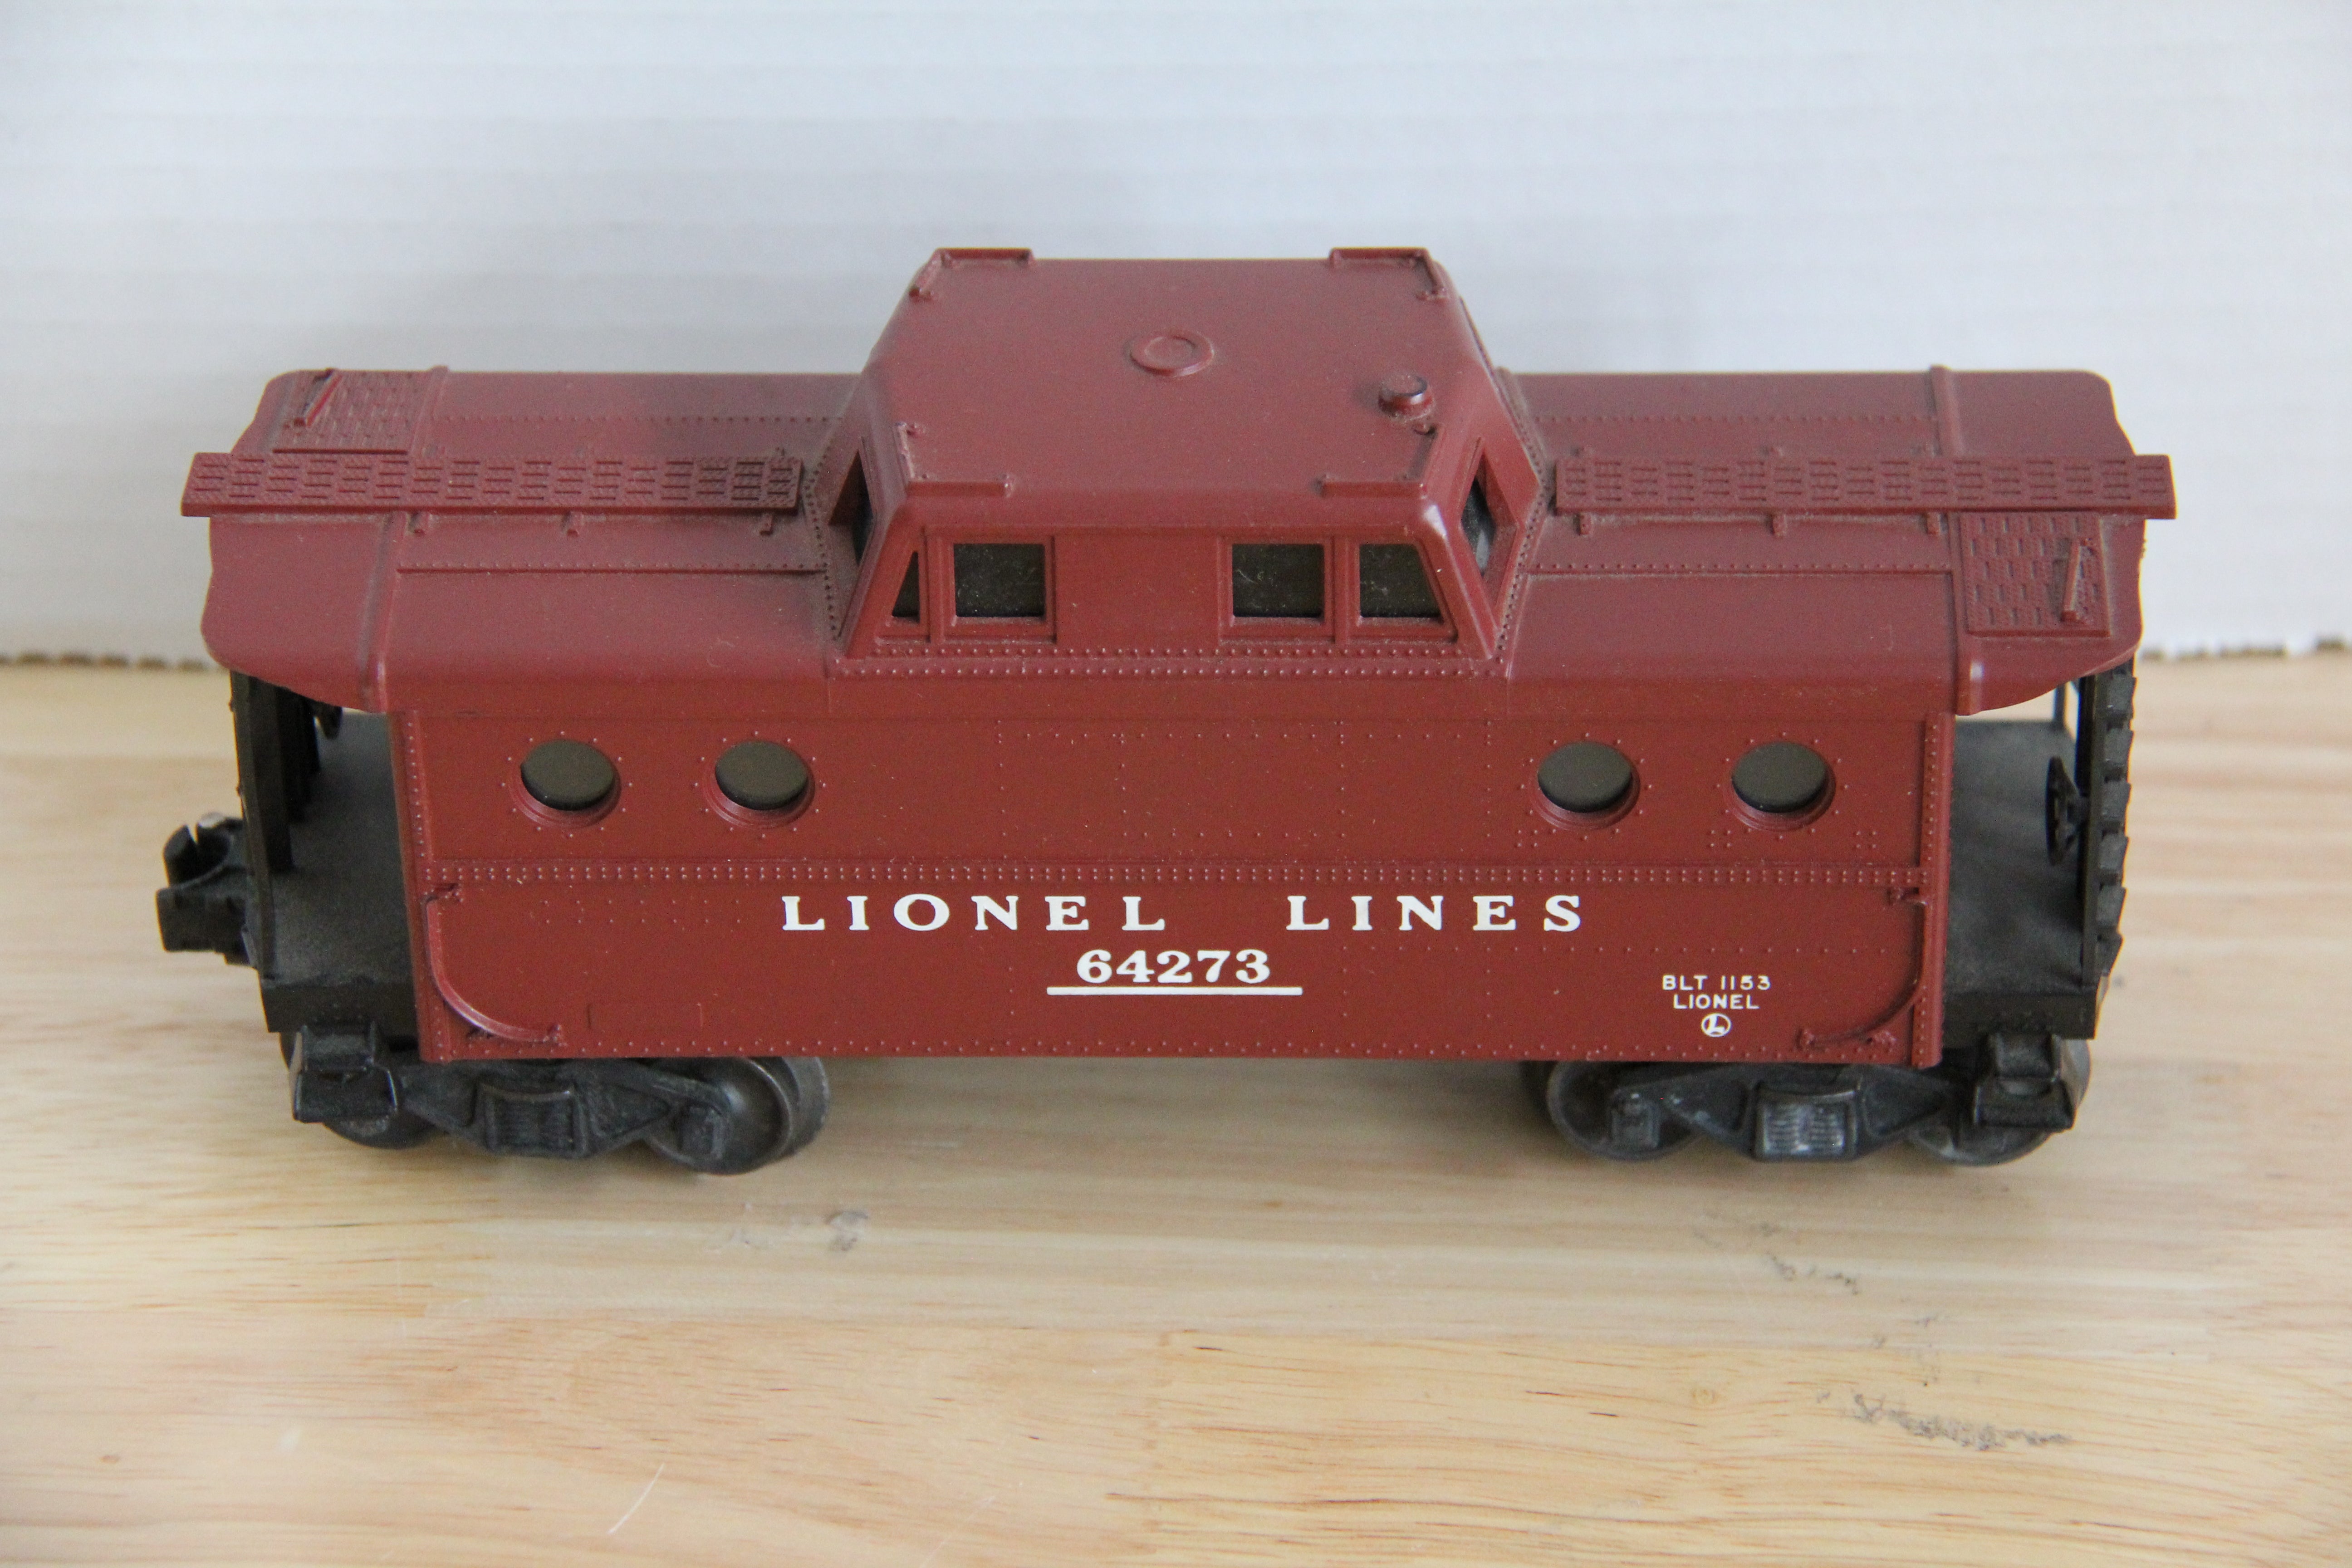 Lionel 6427-1 Lionel Lines Caboose-Second hand-M2219